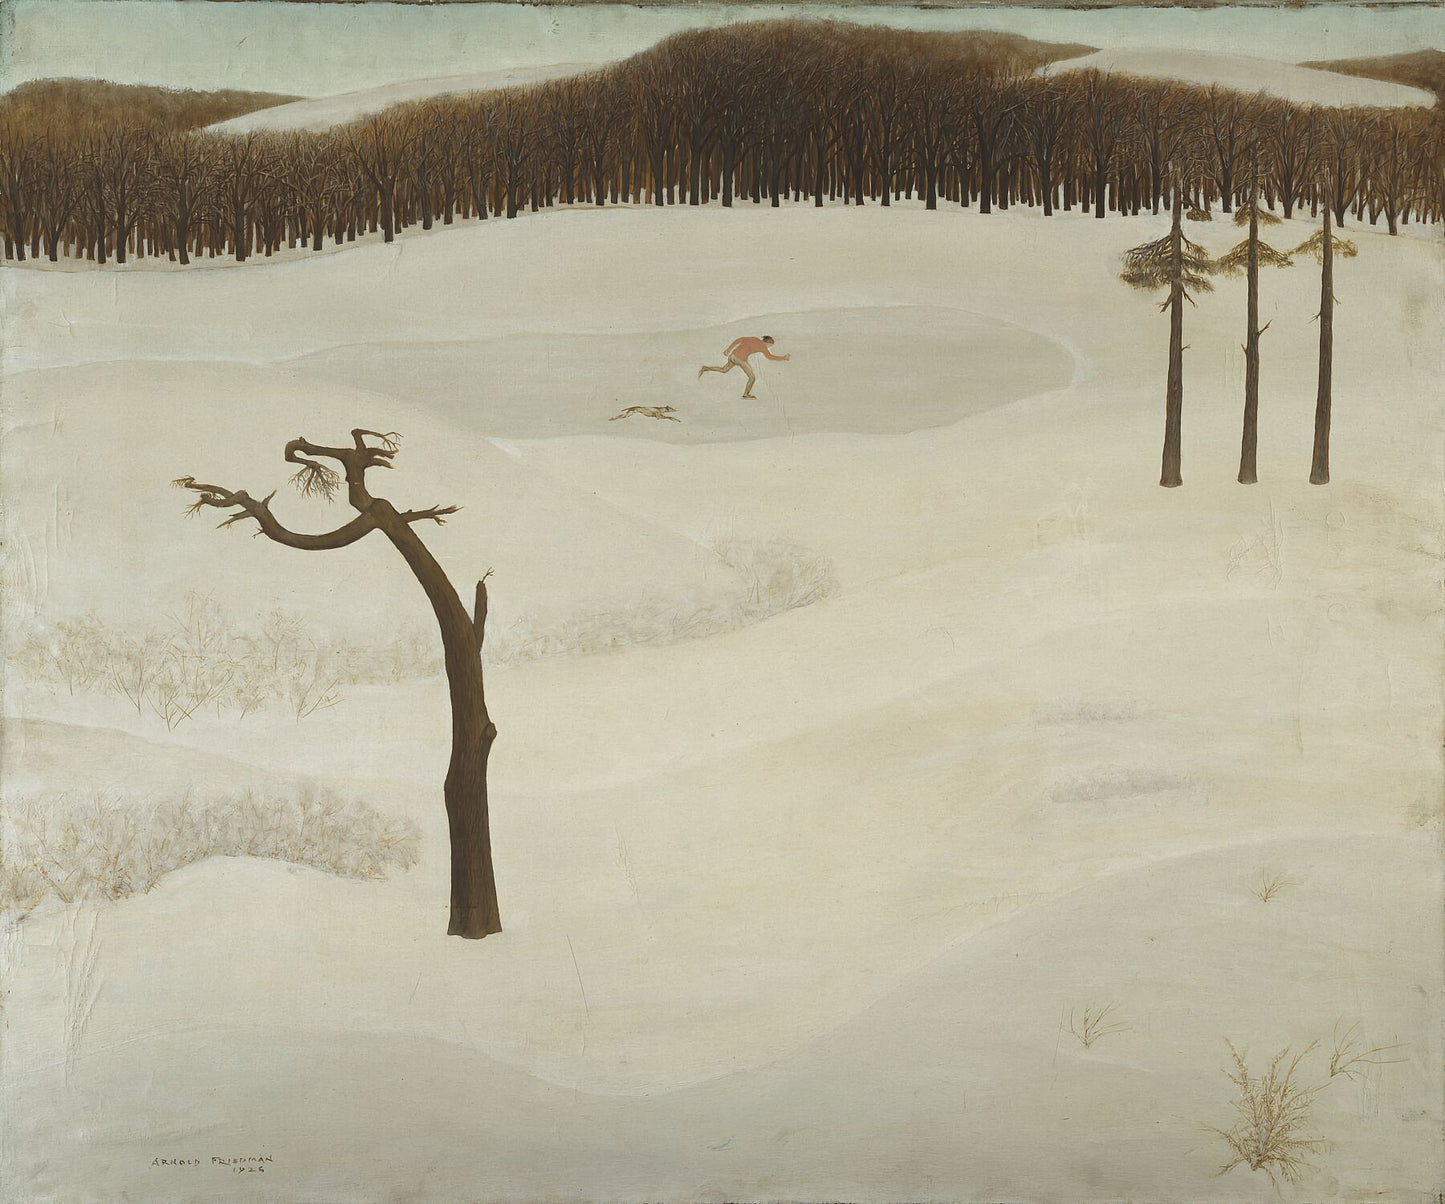 Paysage de neige d'Arnold Friedman - 1926 